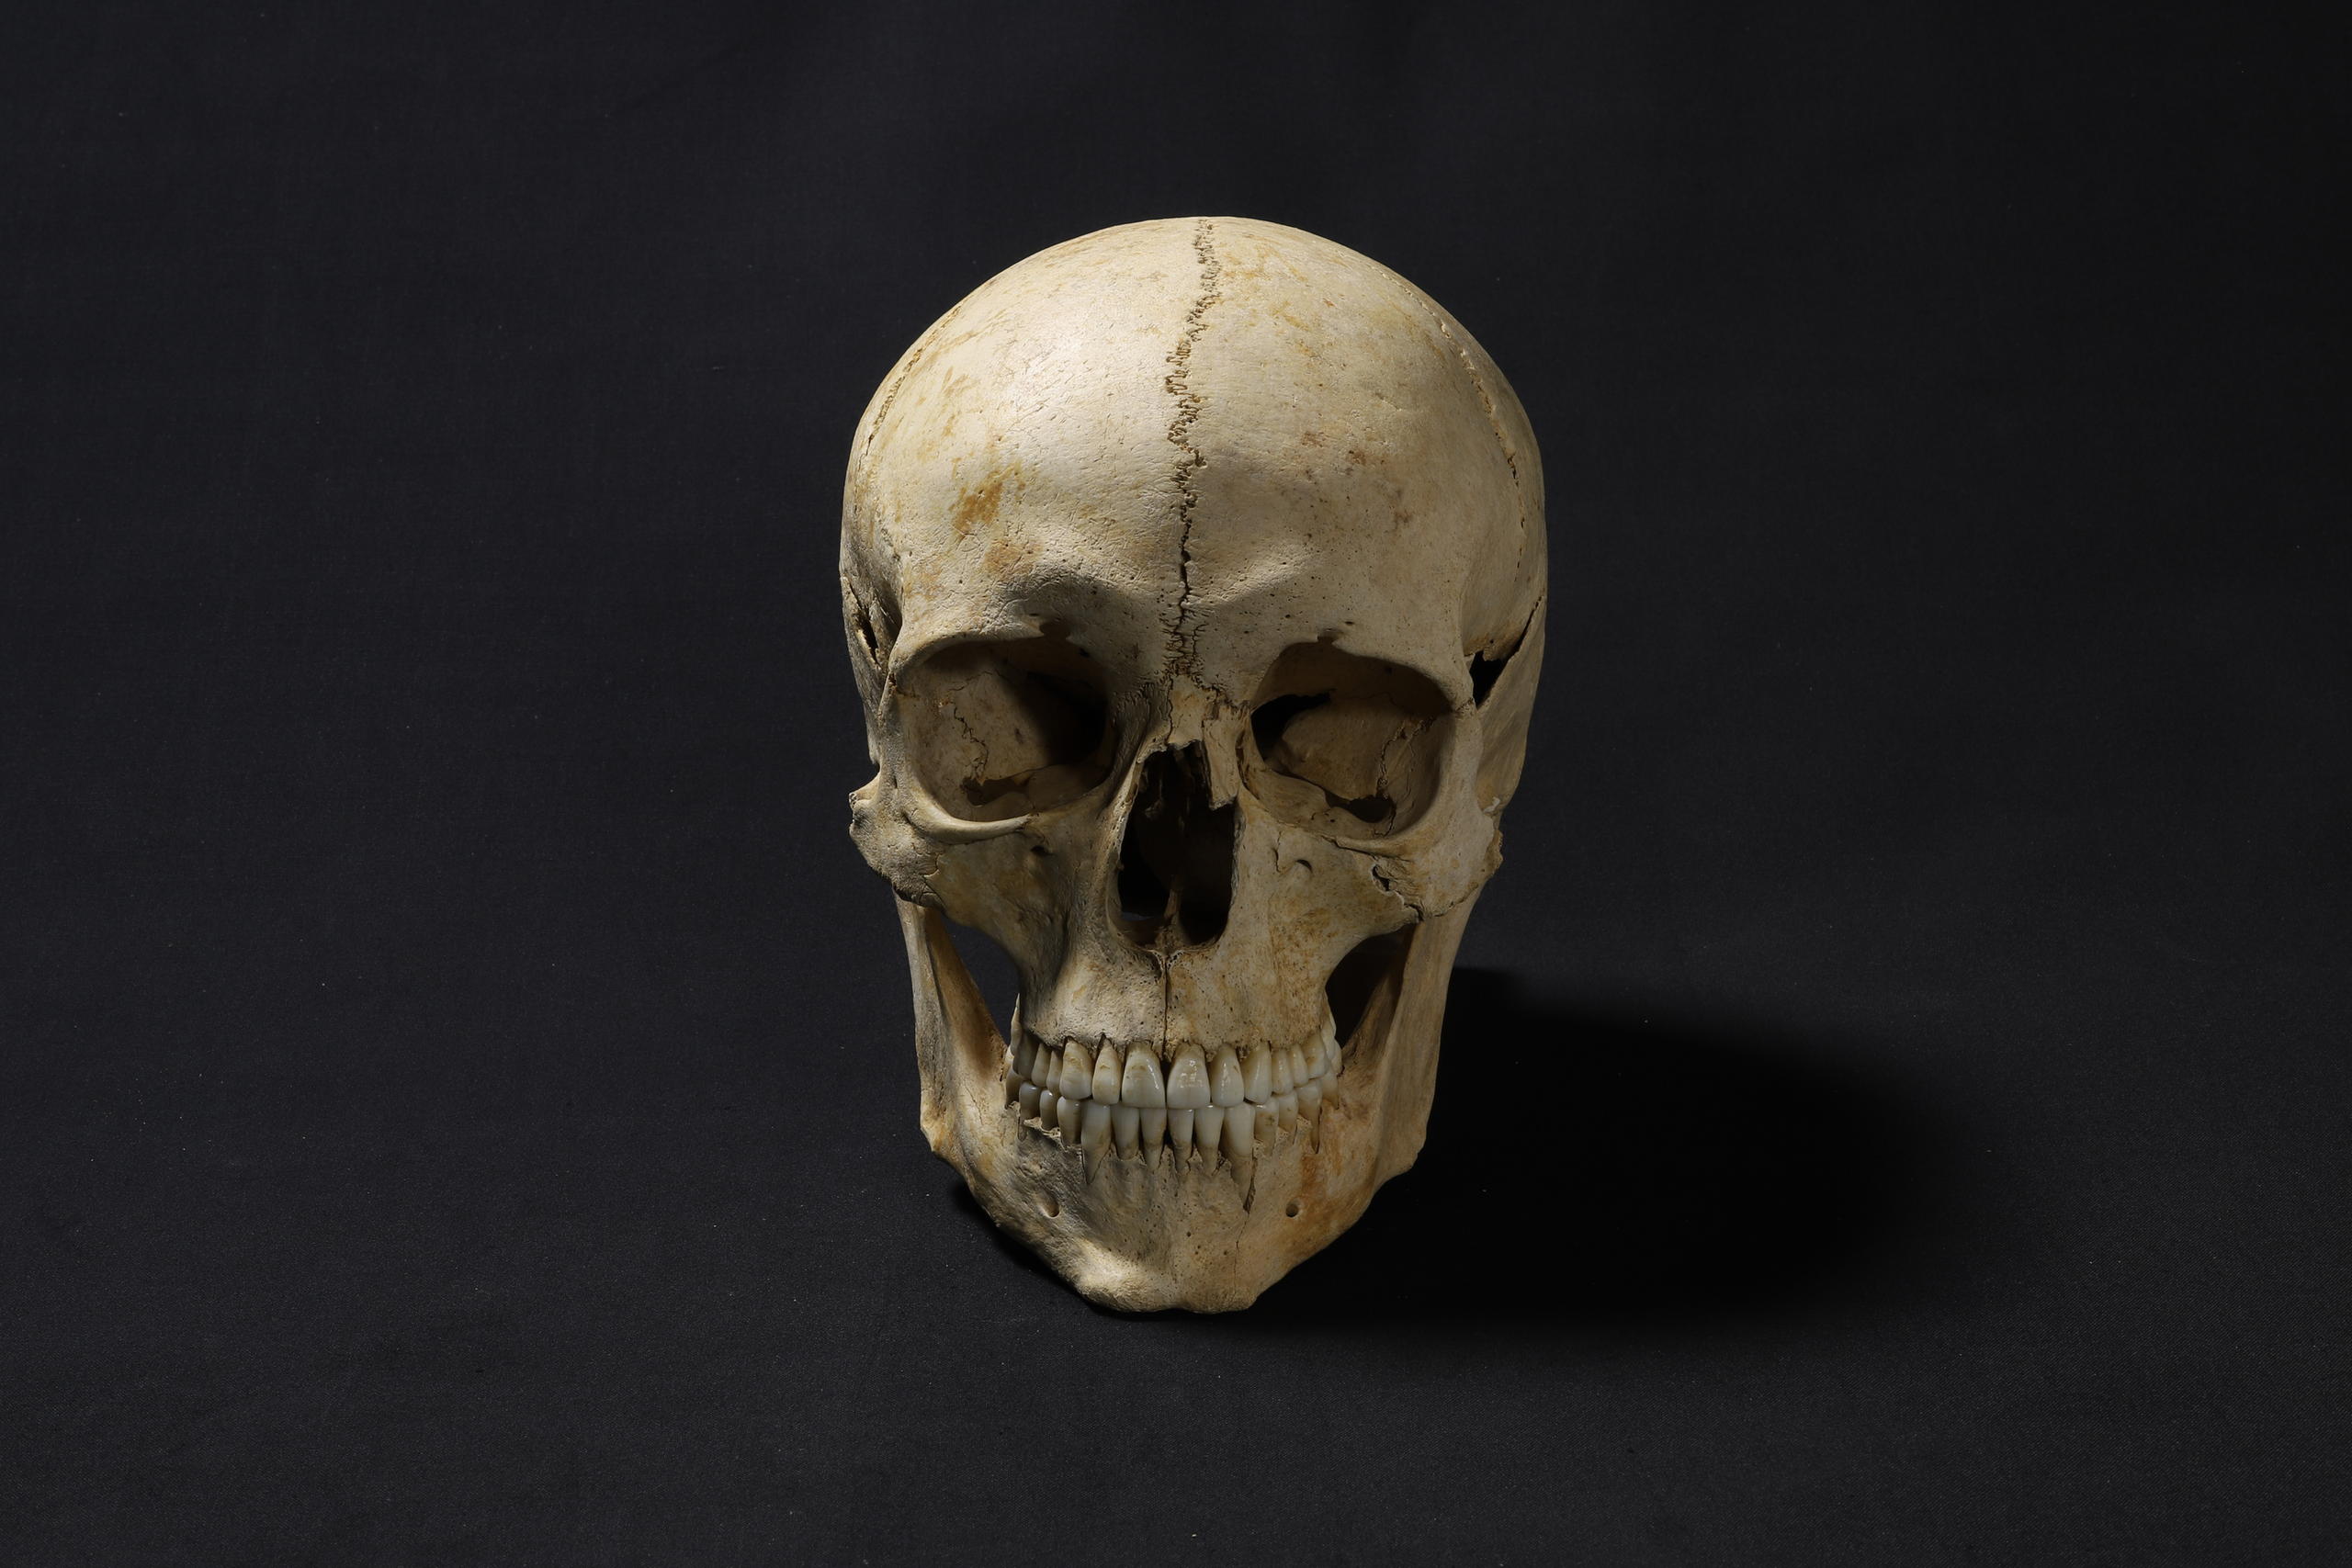 Skull of Adelasius Ebalchus